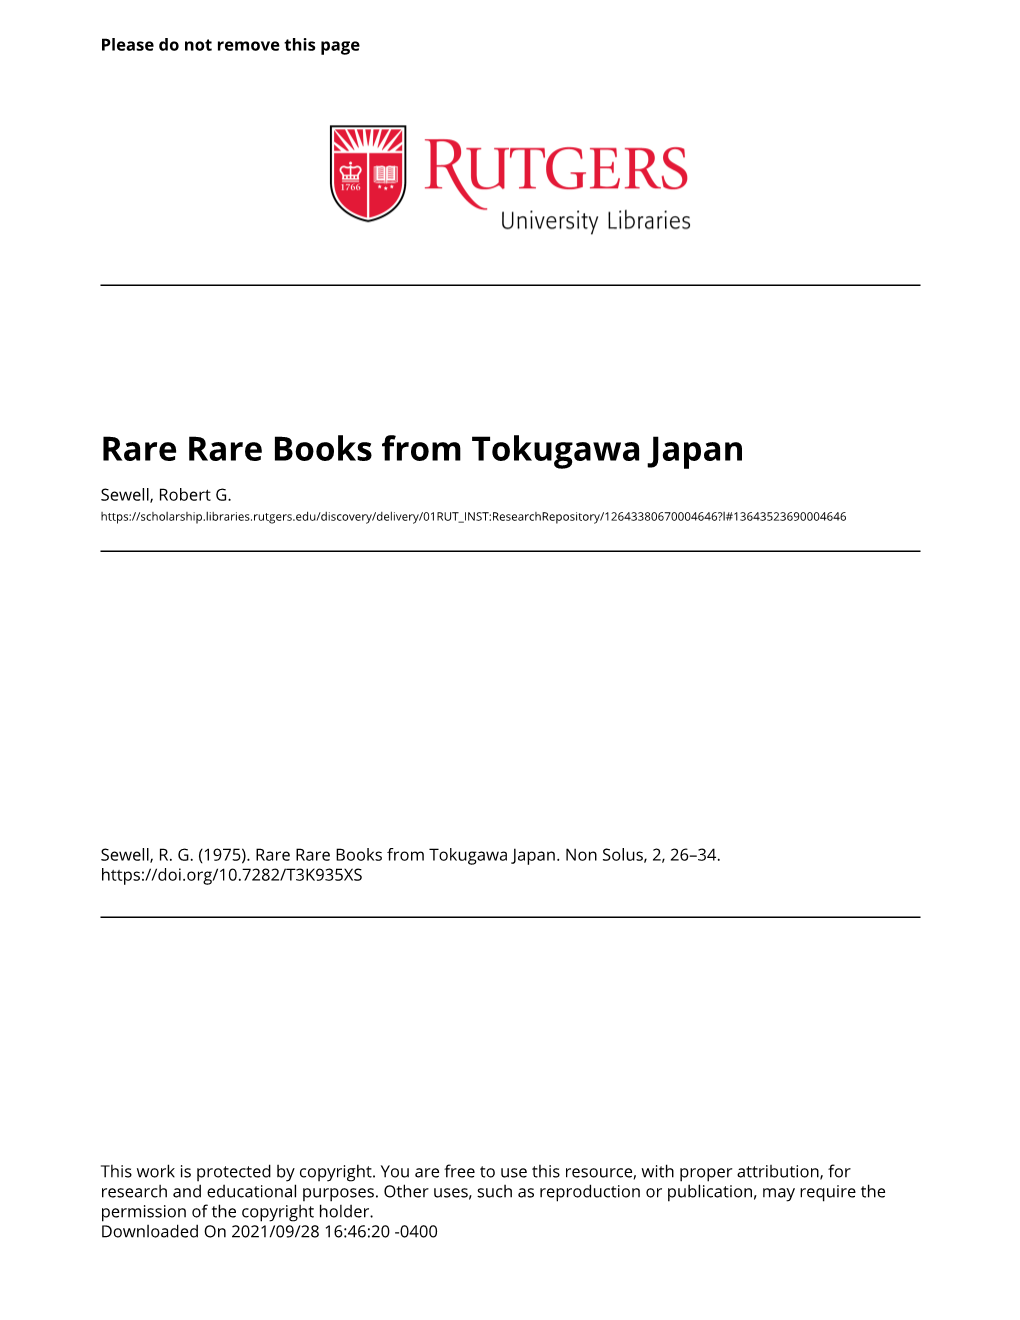 Rare Rare Books from Tokugawa Japan